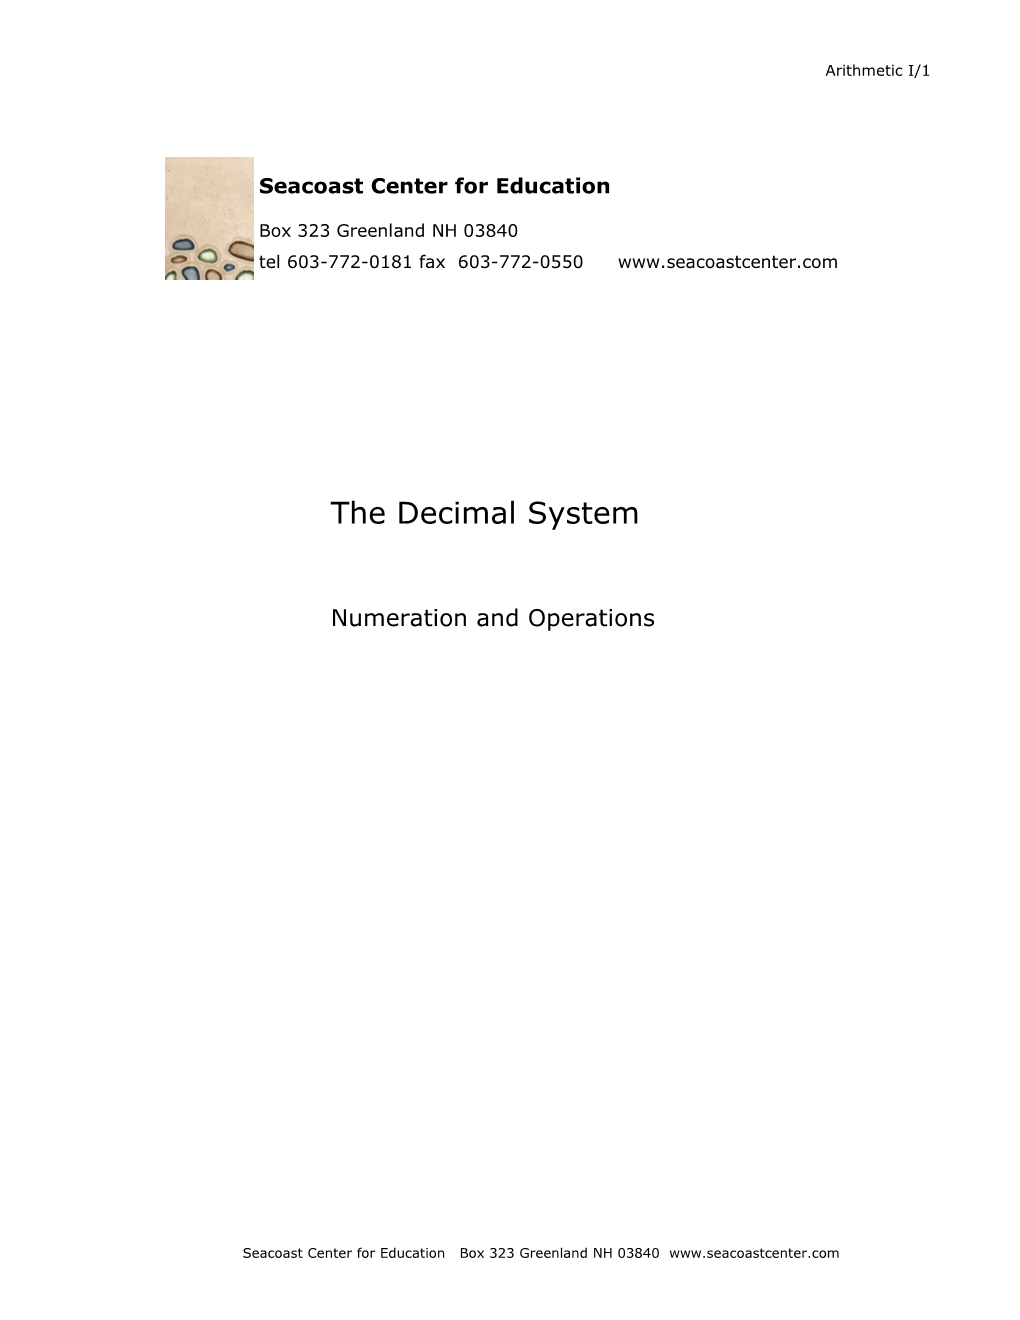 The Decimal System